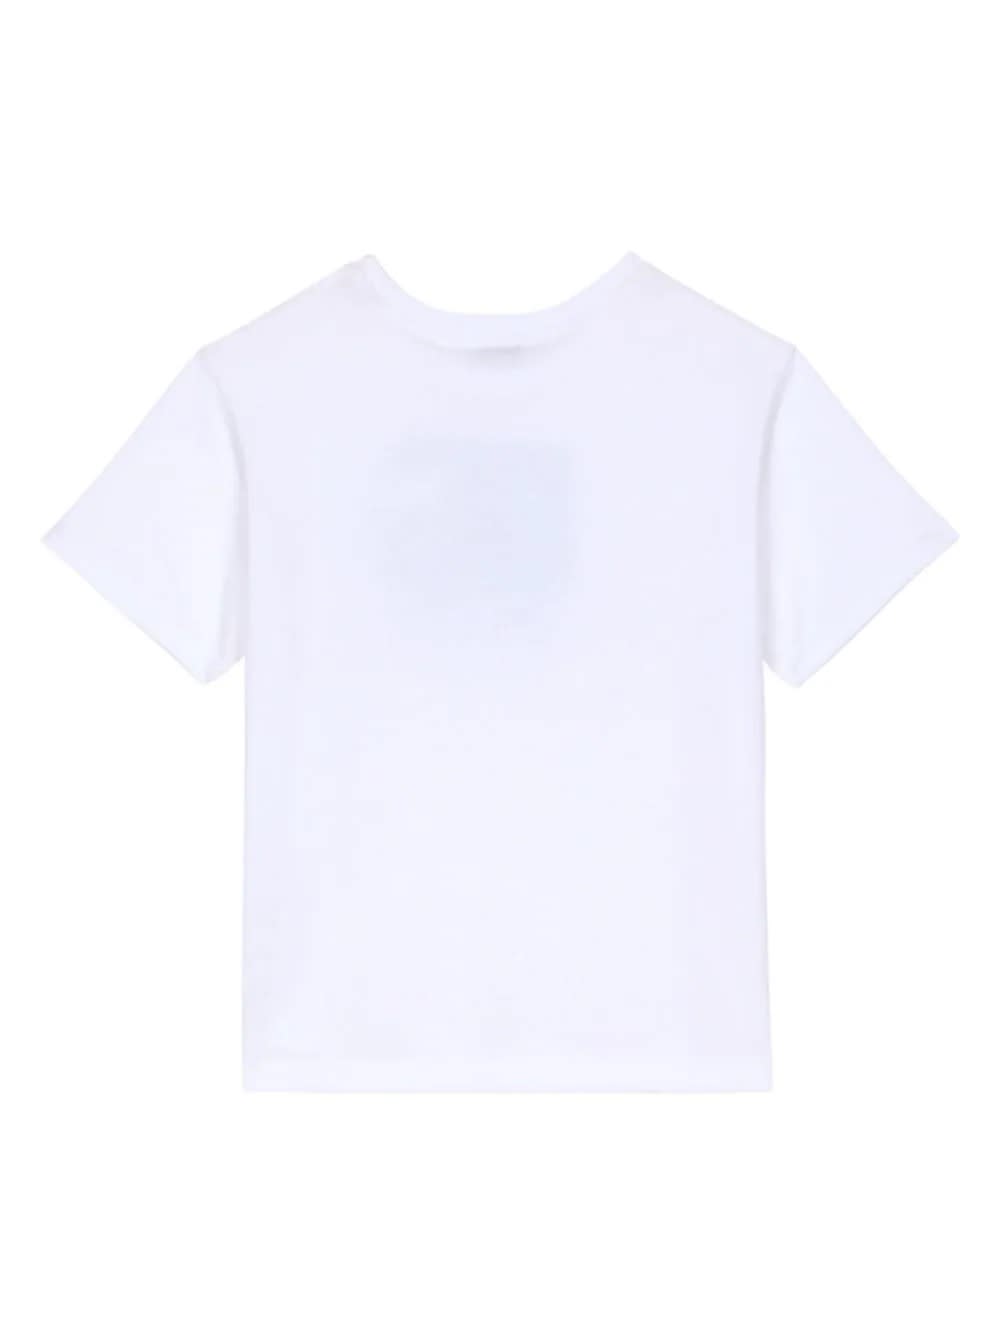 Shop Dolce & Gabbana White T-shirt With Dg Milano Logo Print